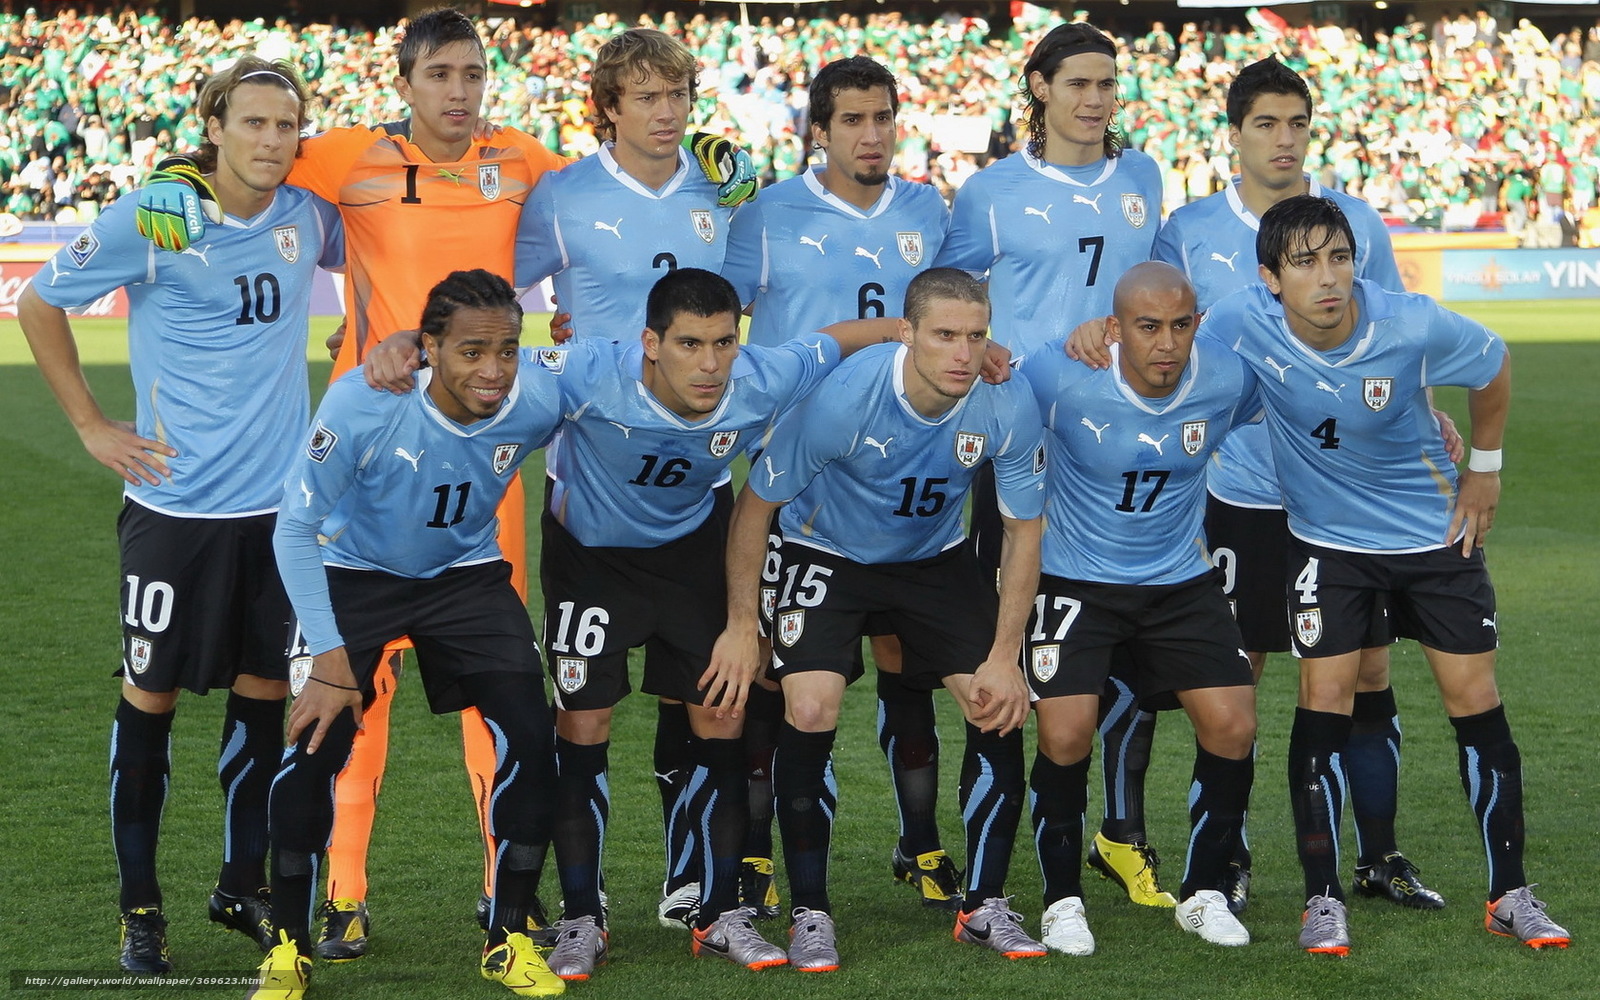 Wallpaper South Africa Team Uruguay Football